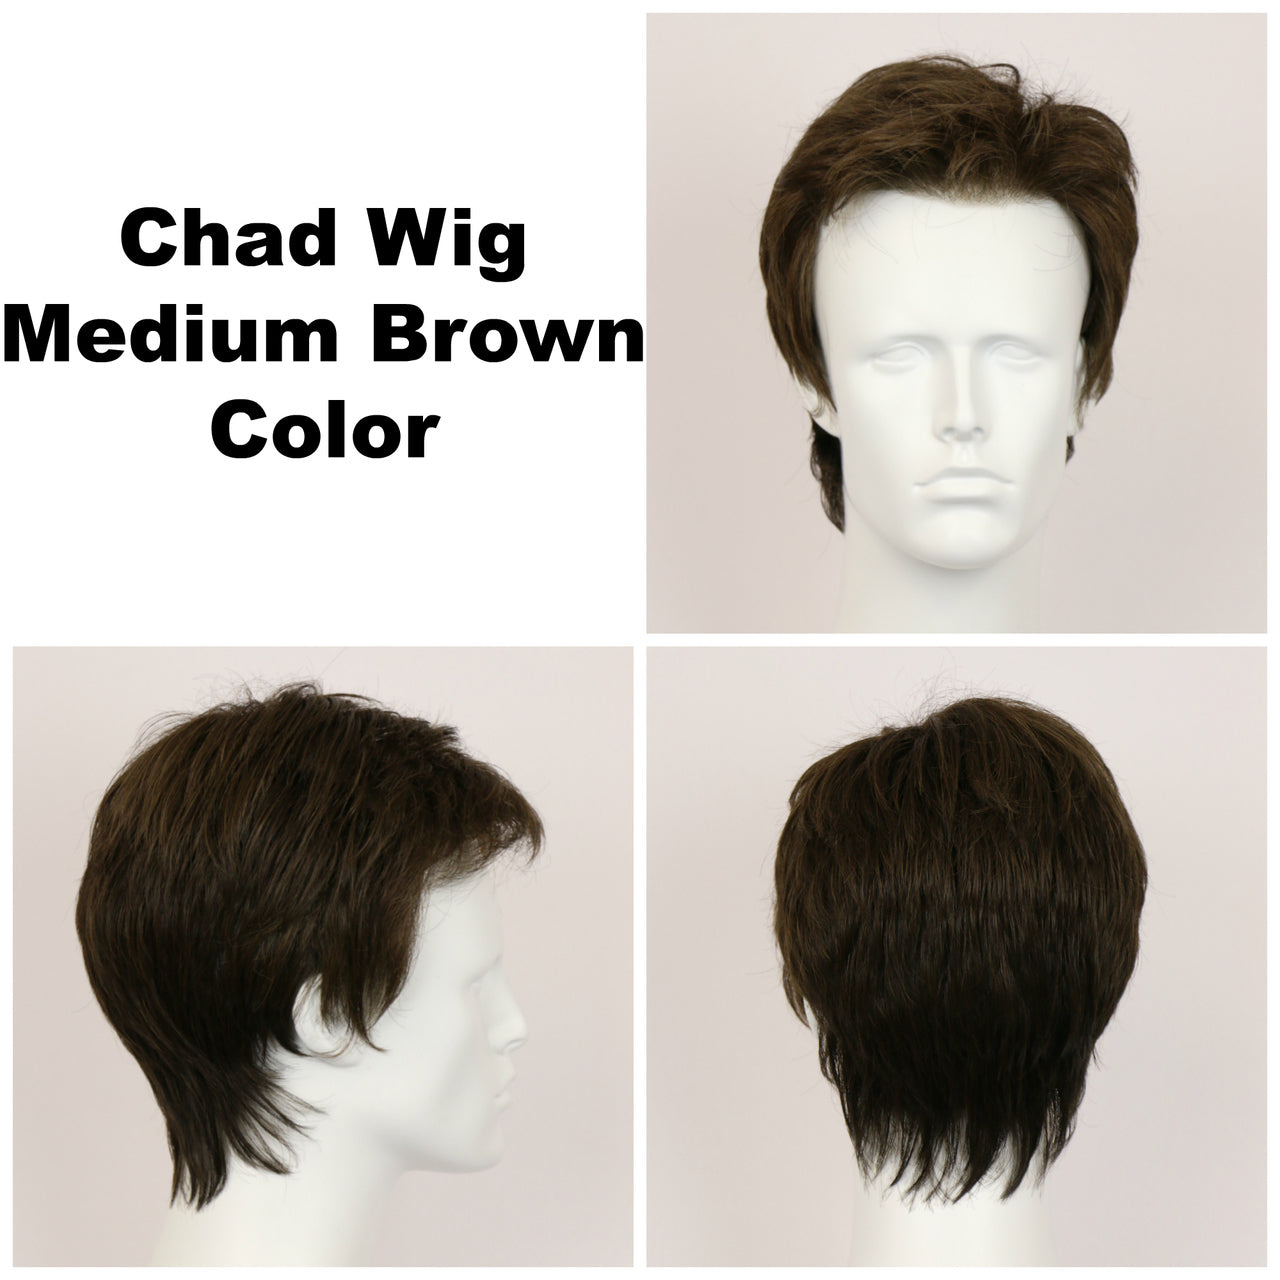 Medium Brown / Chad / Men's Wig